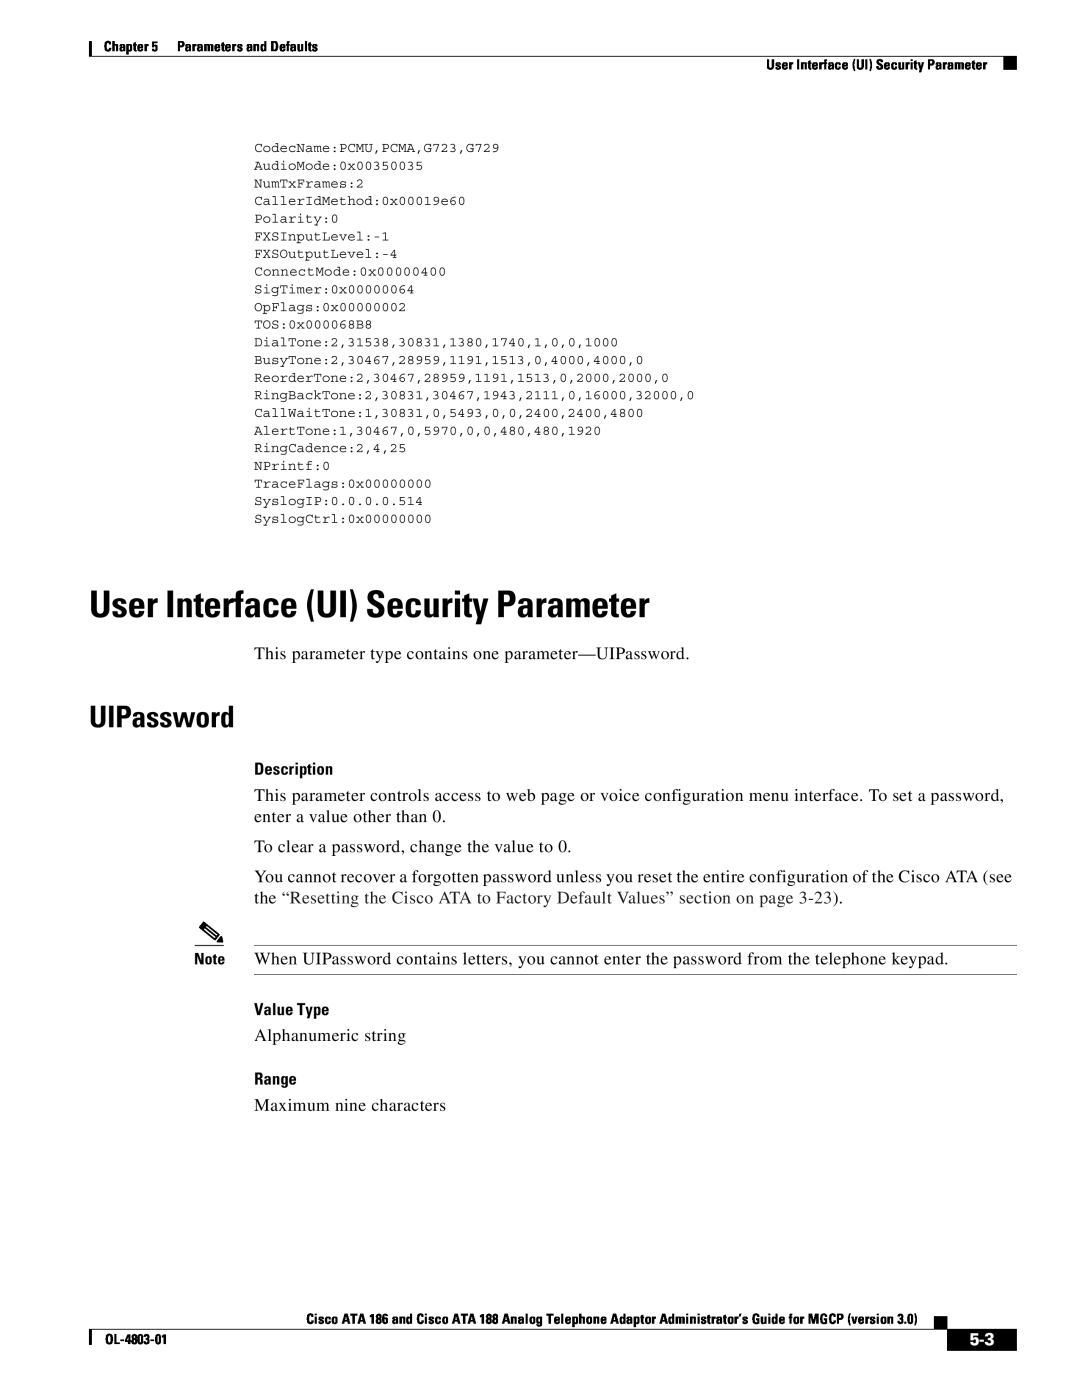 Cisco Systems ATA 186 manual User Interface UI Security Parameter, UIPassword, Value Type, Range, Description 